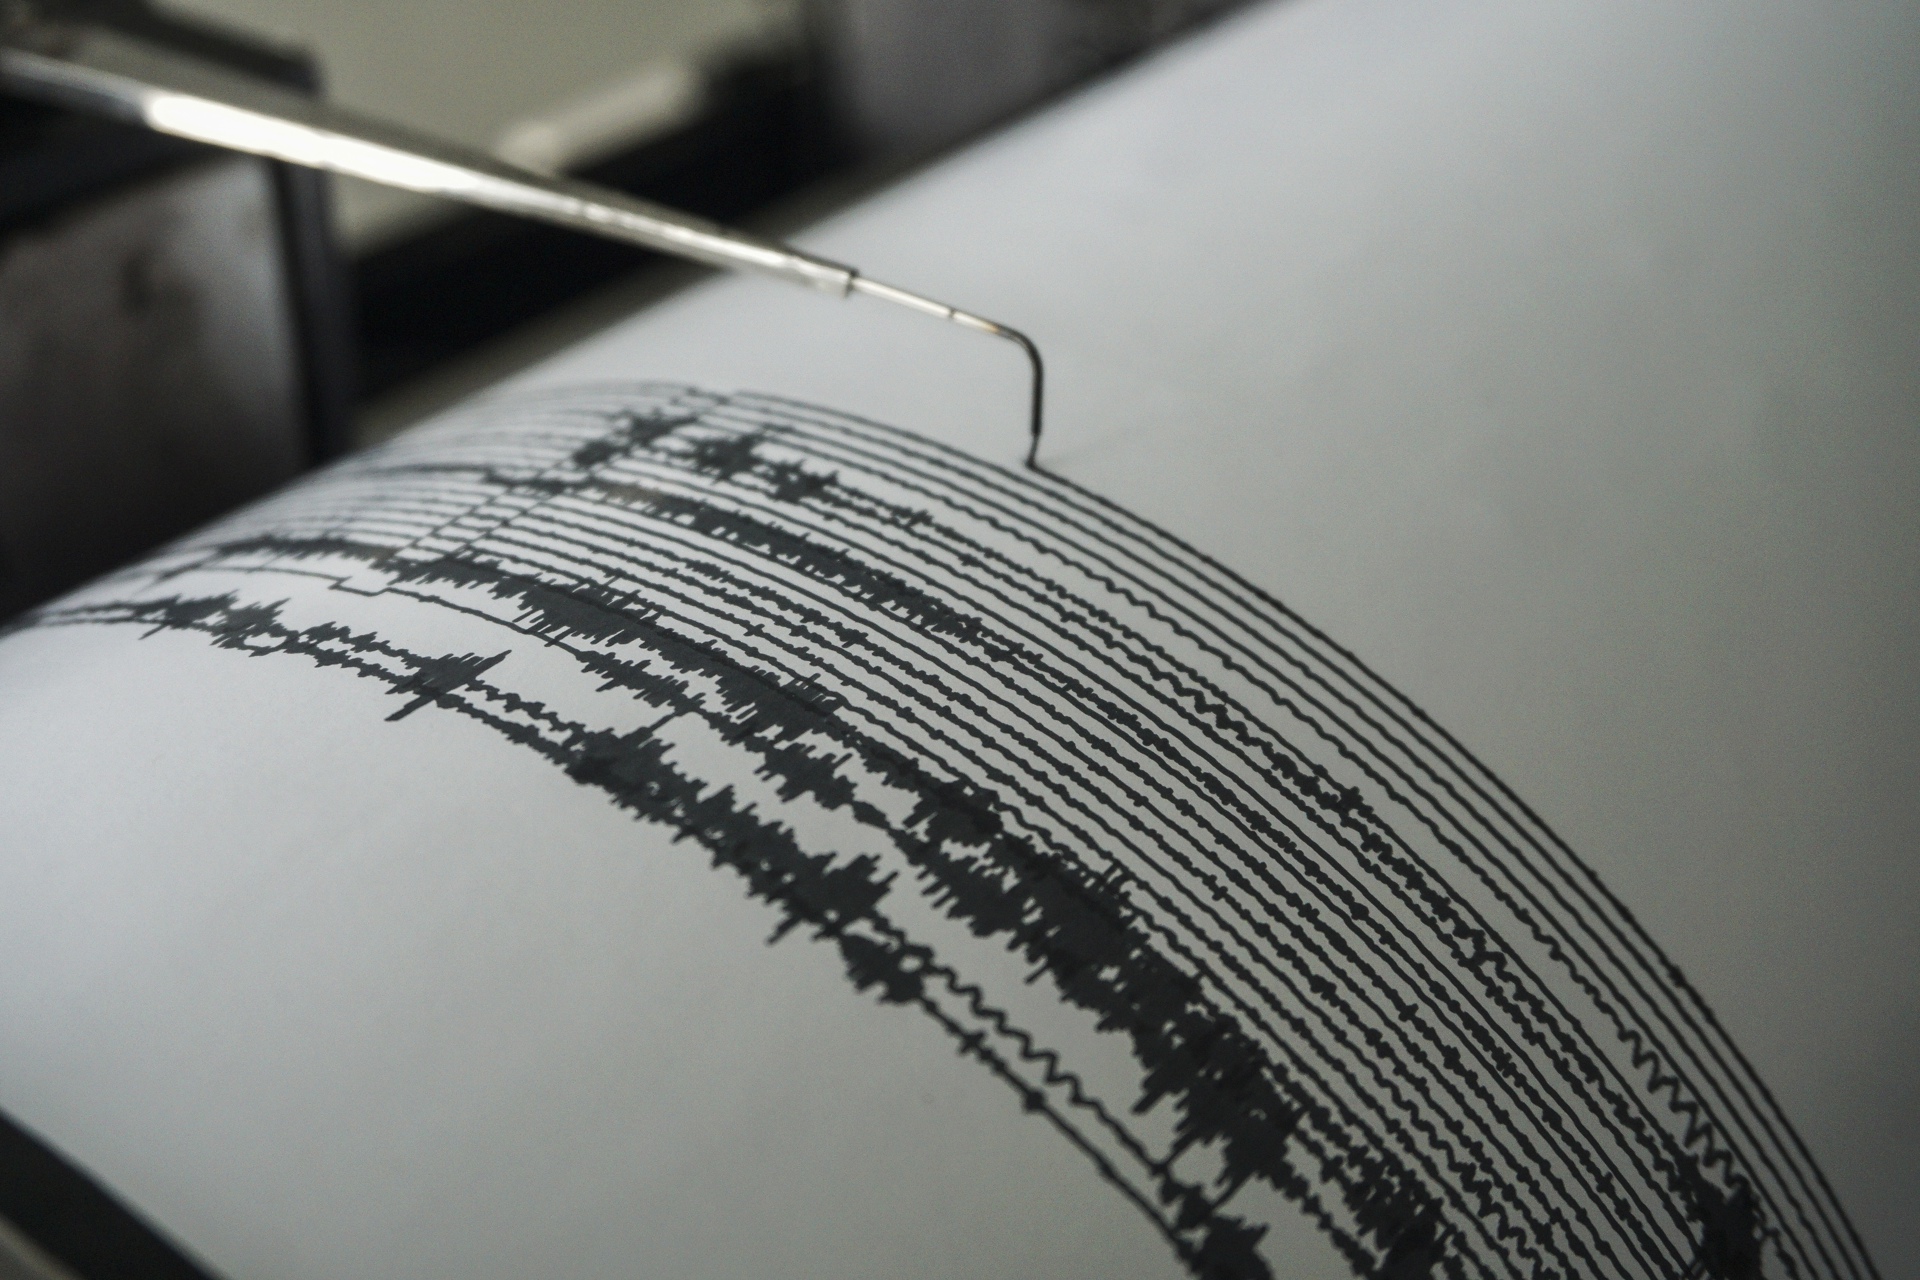 Gempa berkekuatan 7,3 SR melanda Selandia Baru bagian utara